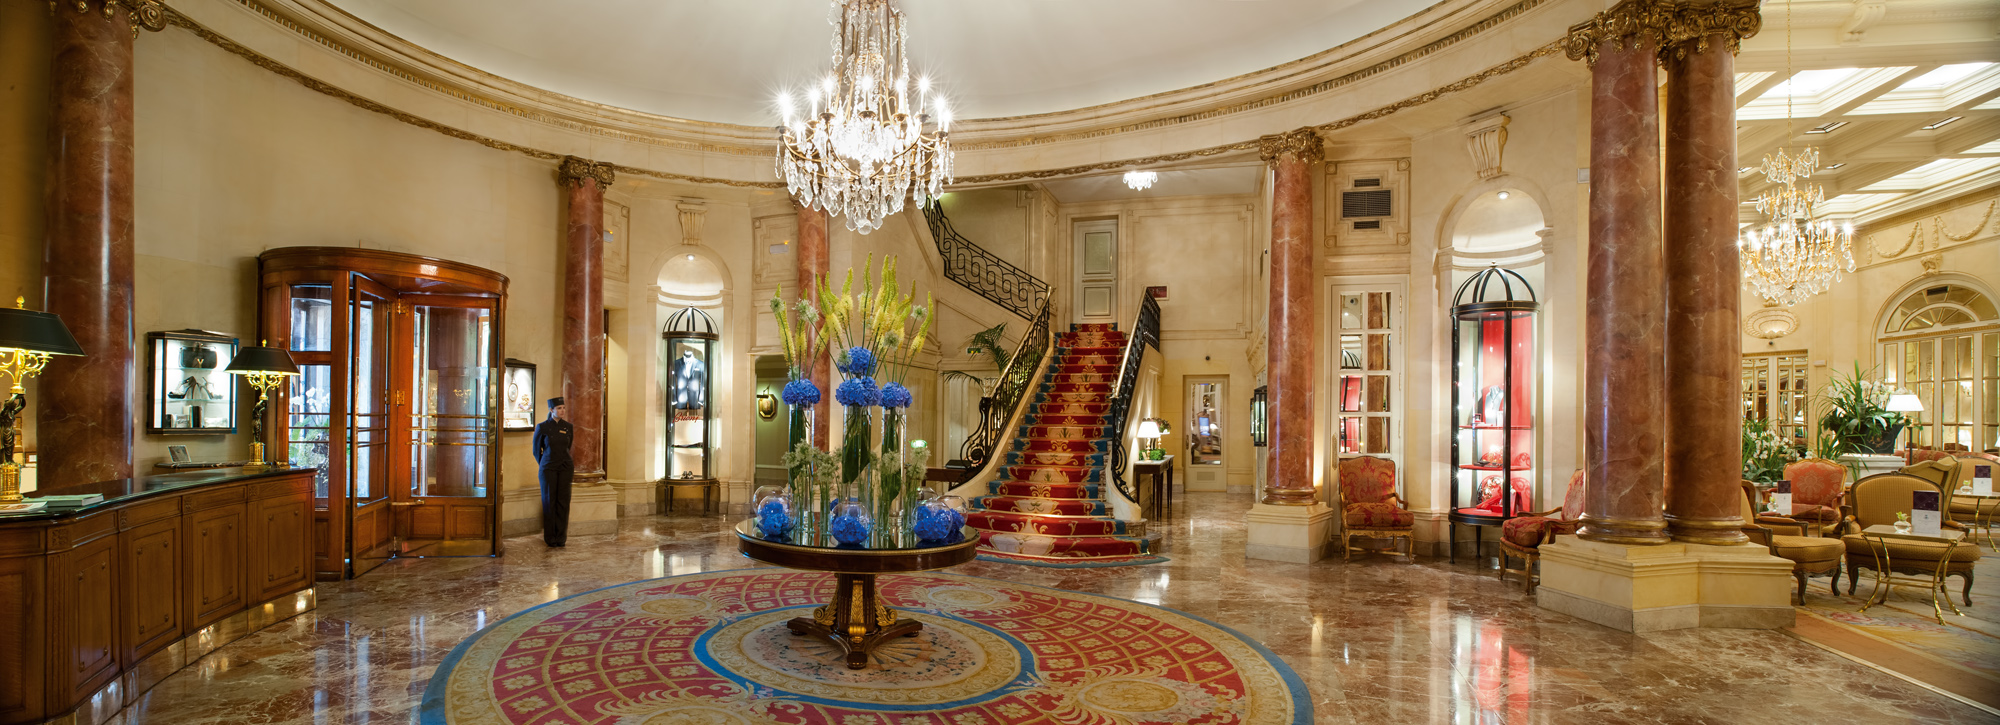 1850: Cesar Ritz – The Name that Symbolizes Hotel Luxury